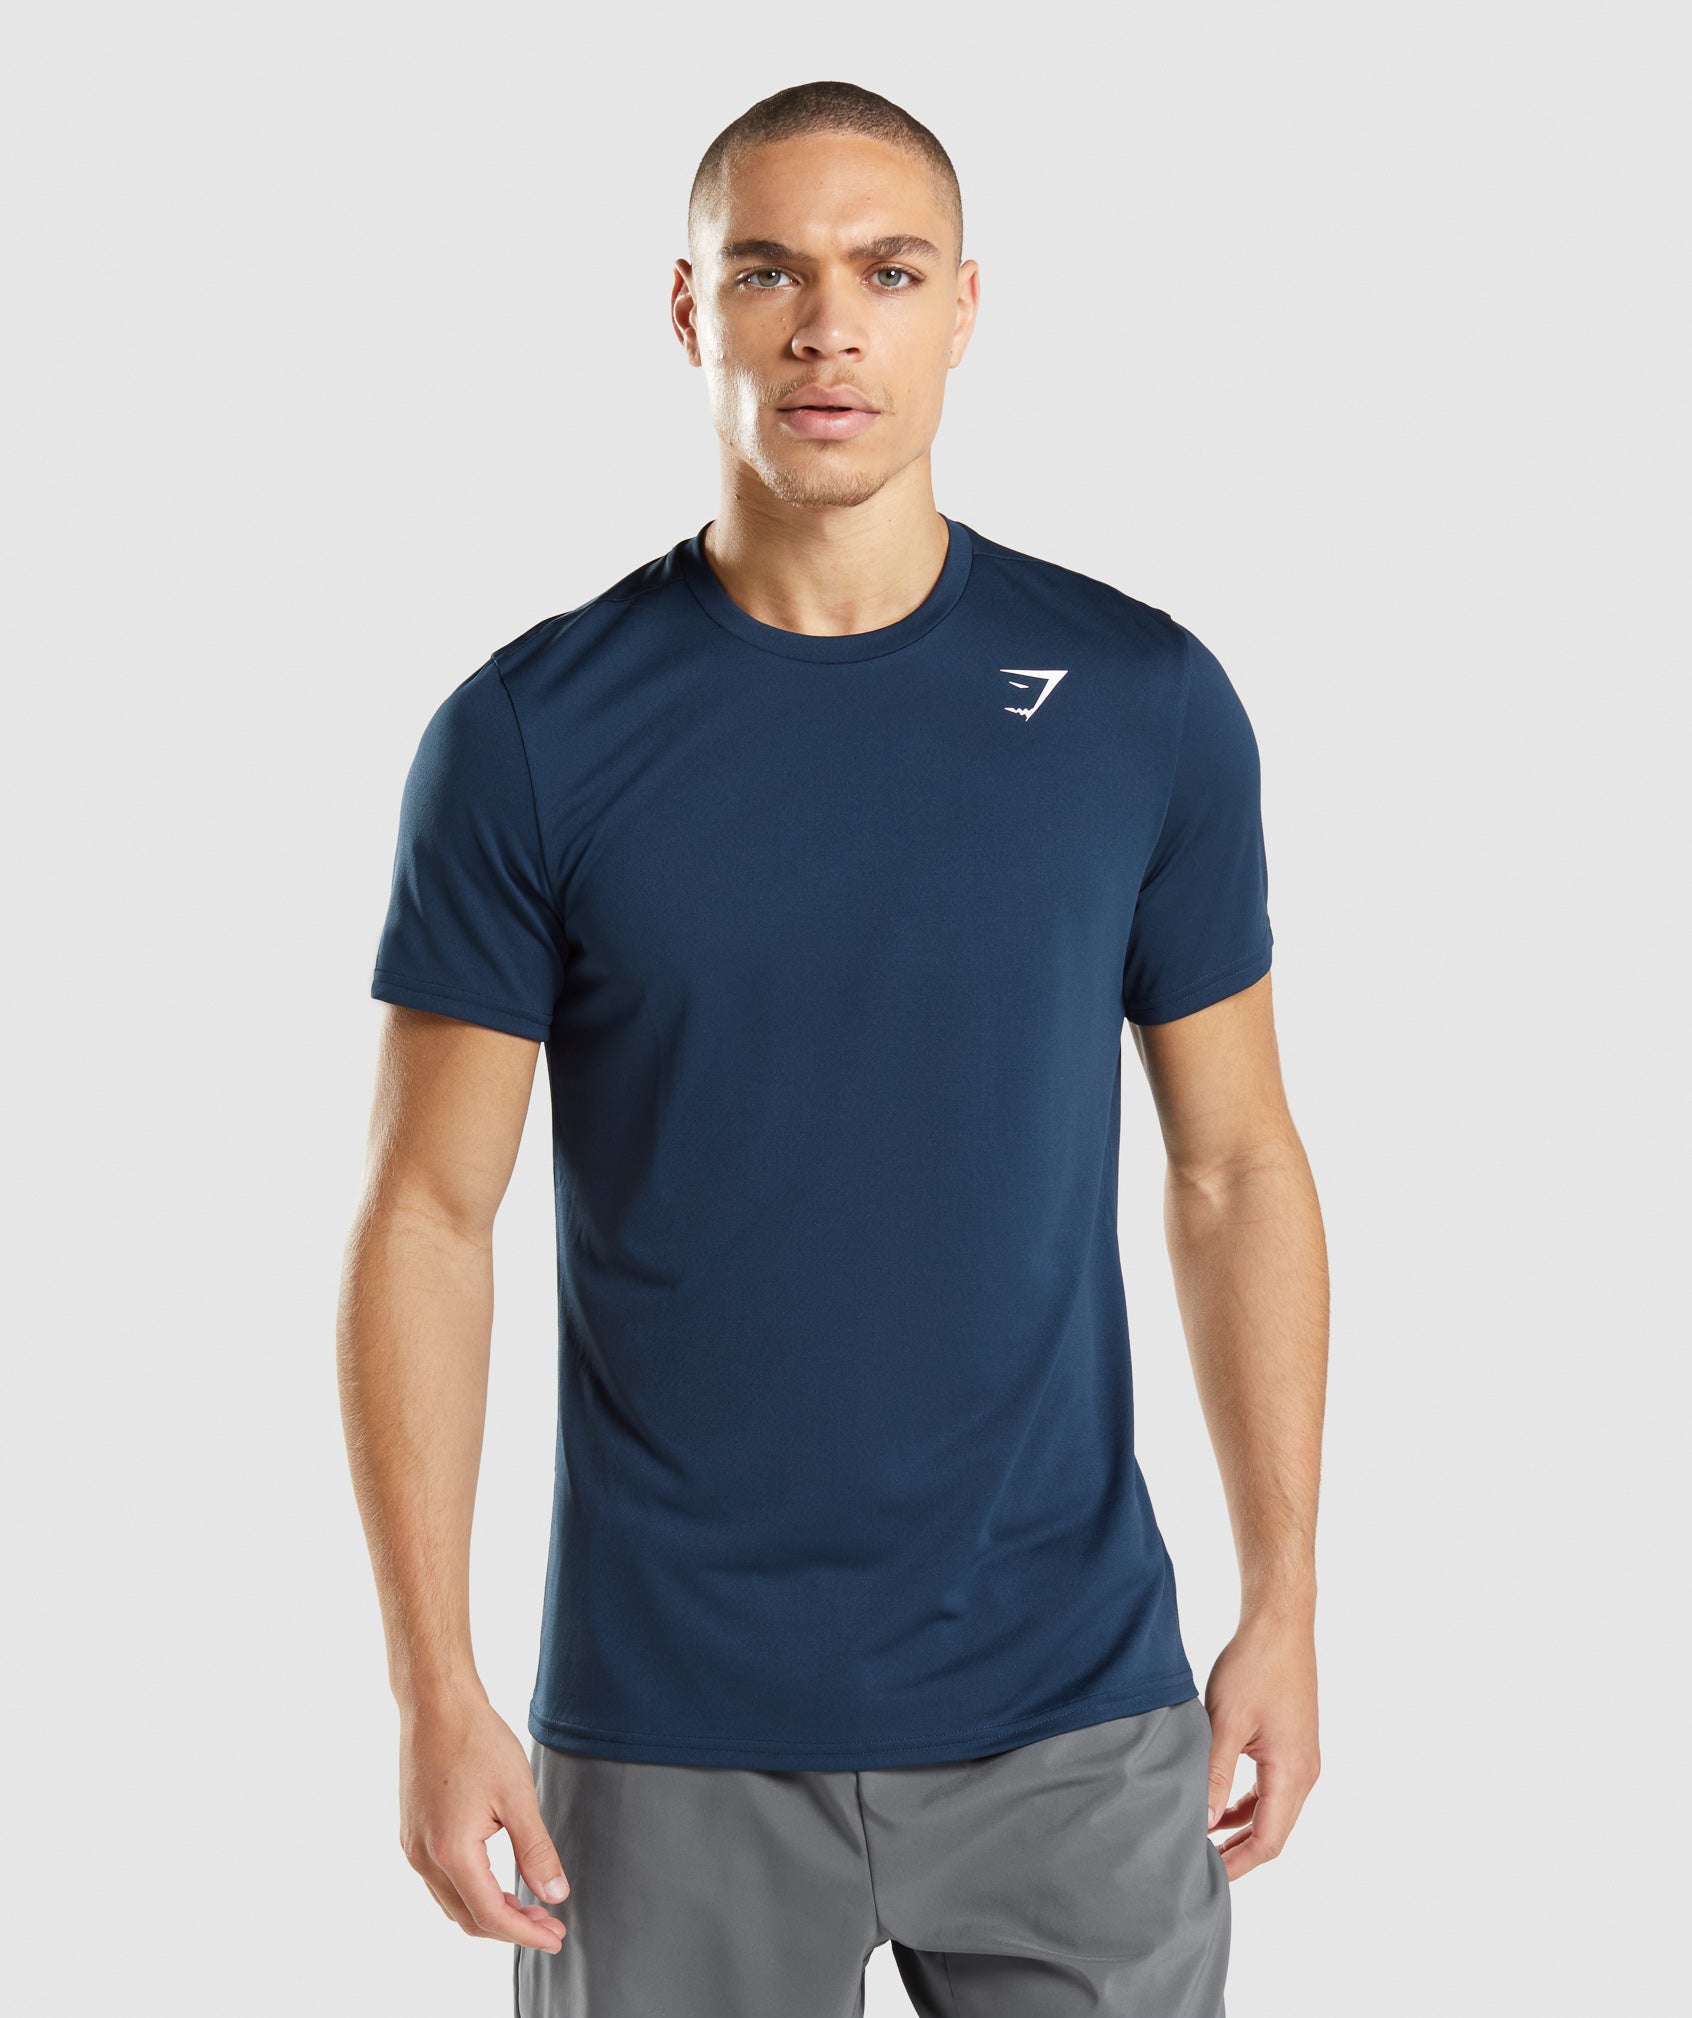 Navy Blue & White | Graphic T-Shirt